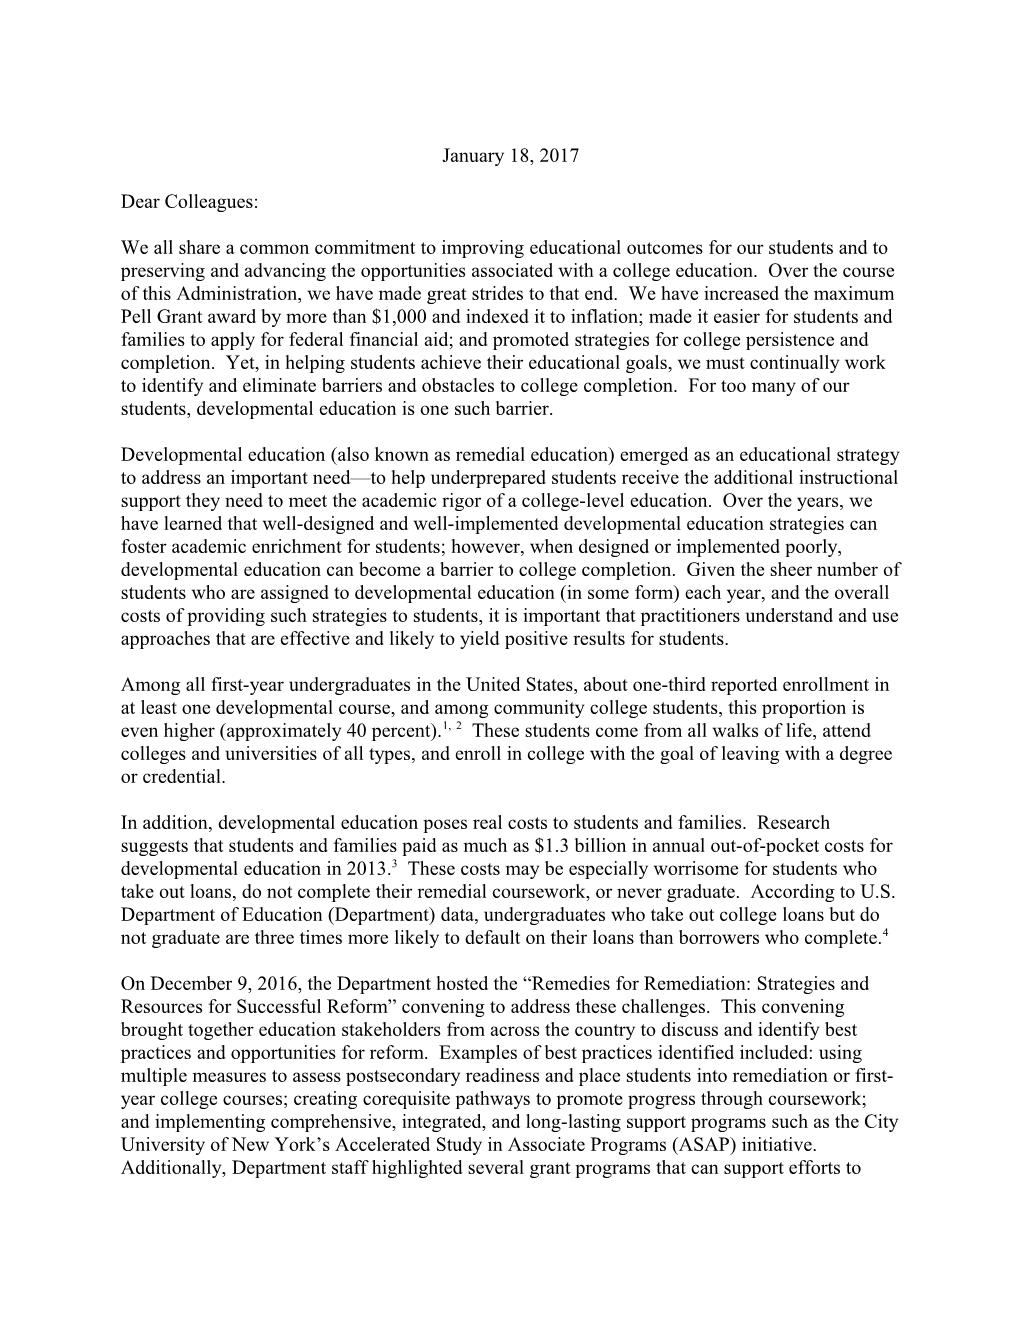 Dear Colleague Letter on Developmental Education from Undersecretary Ted Mitchell, January